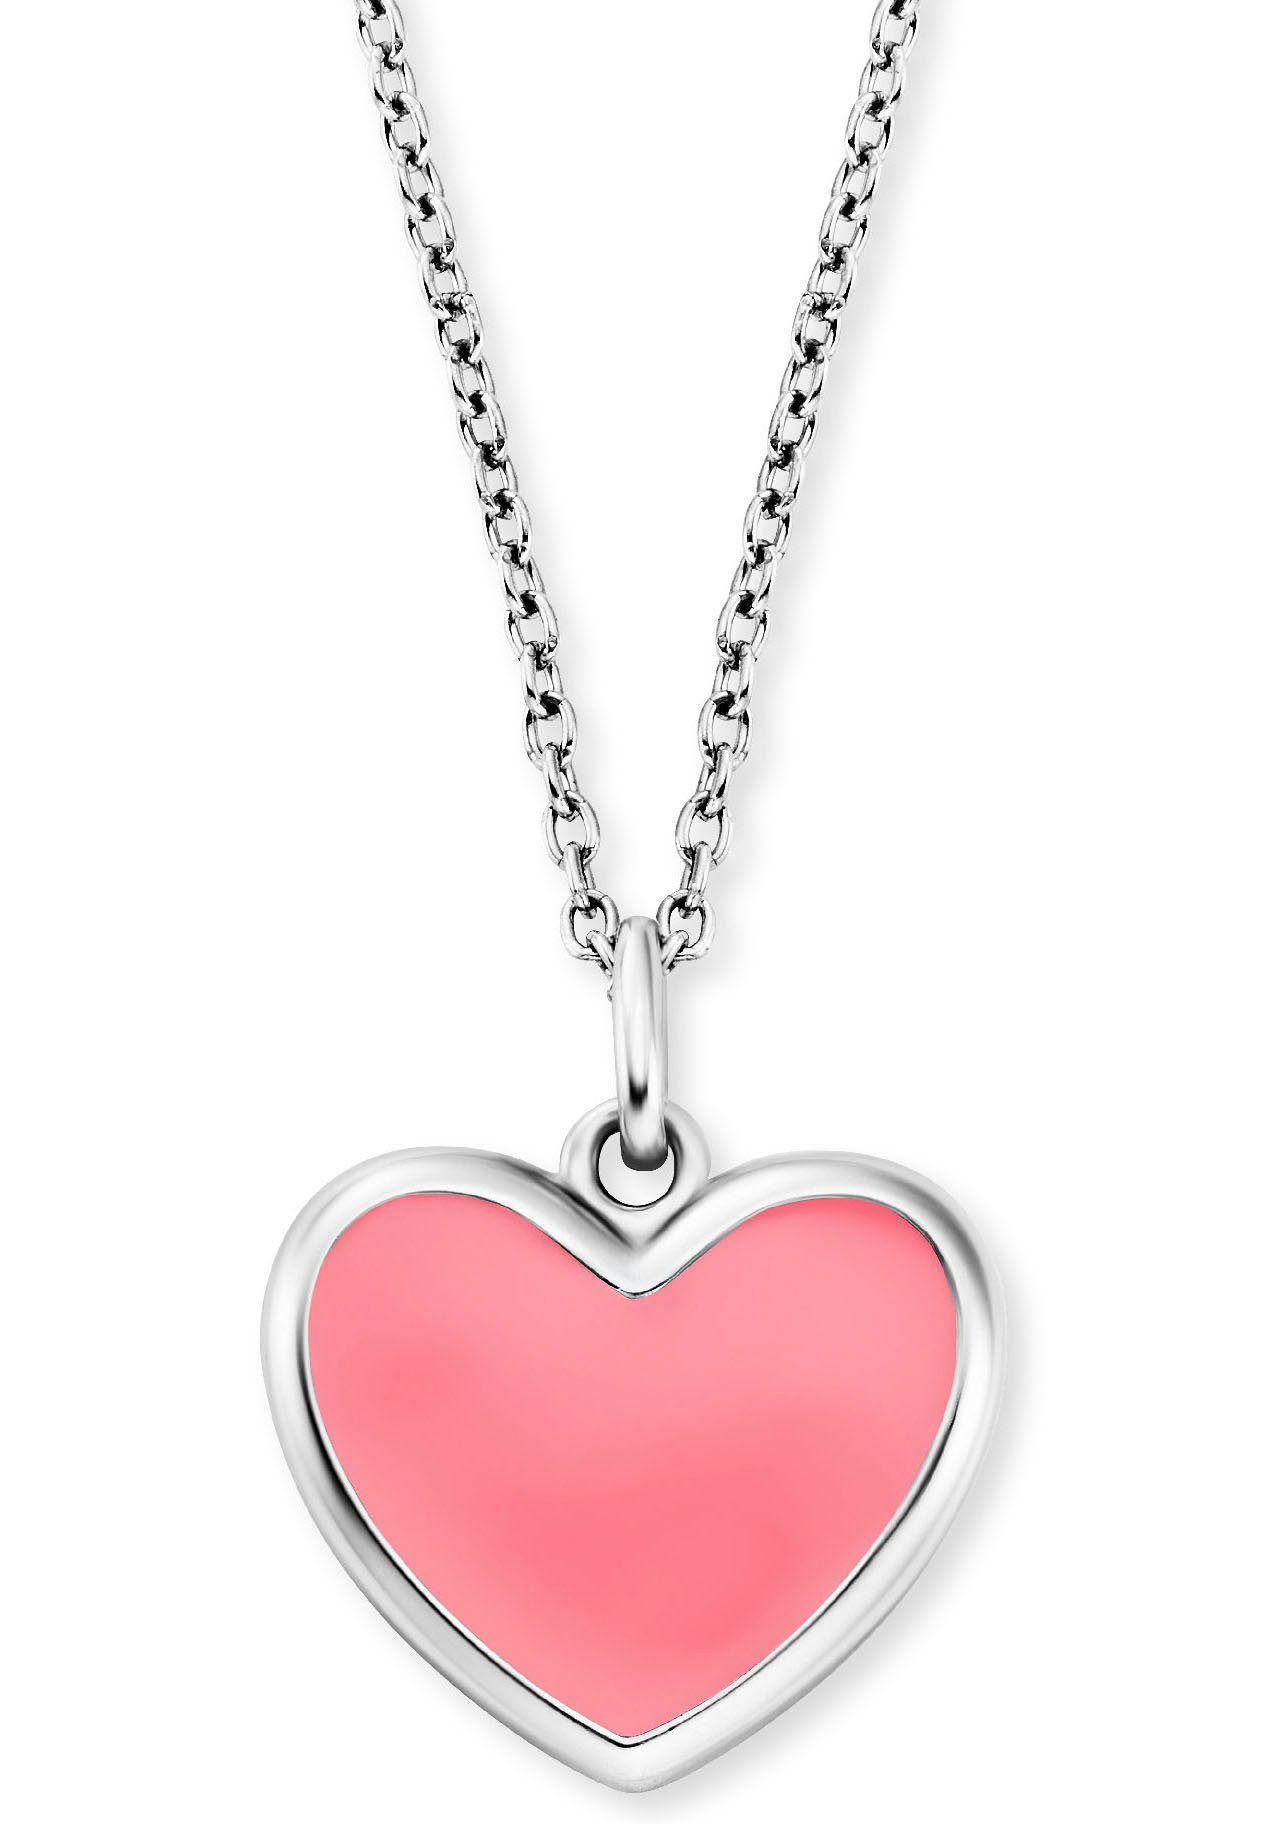 Heart, Little Dieses HEN-HEART-06, Liebe mit und HEN-HEART-13, Schmuck Herz als Blickfang Zuneigung Anhänger symbolisiert Kette Symbol Herz, süßer Herzengel Geschenk,